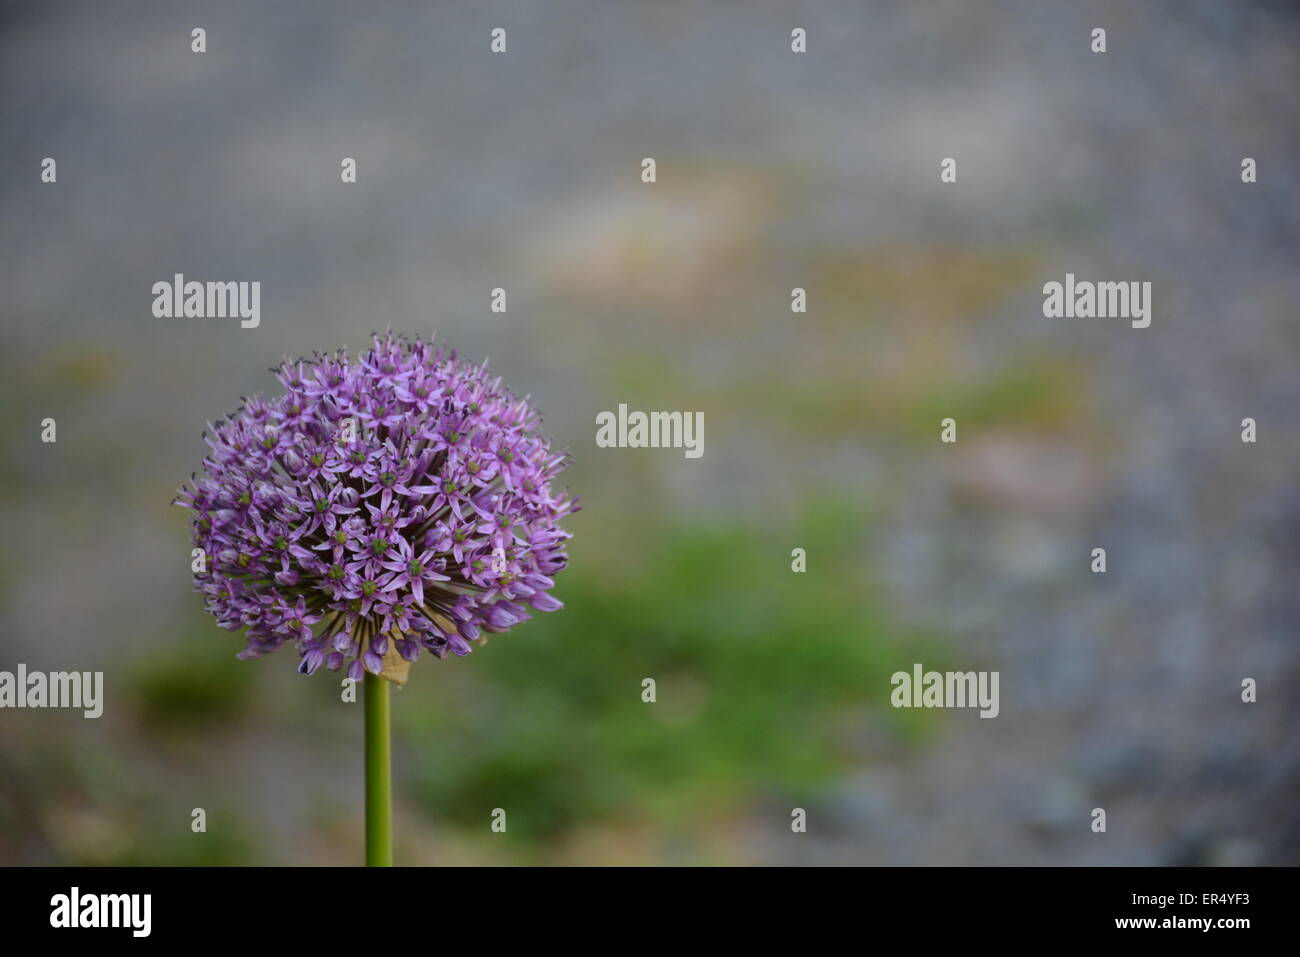 Purple flower on blurred background Stock Photo